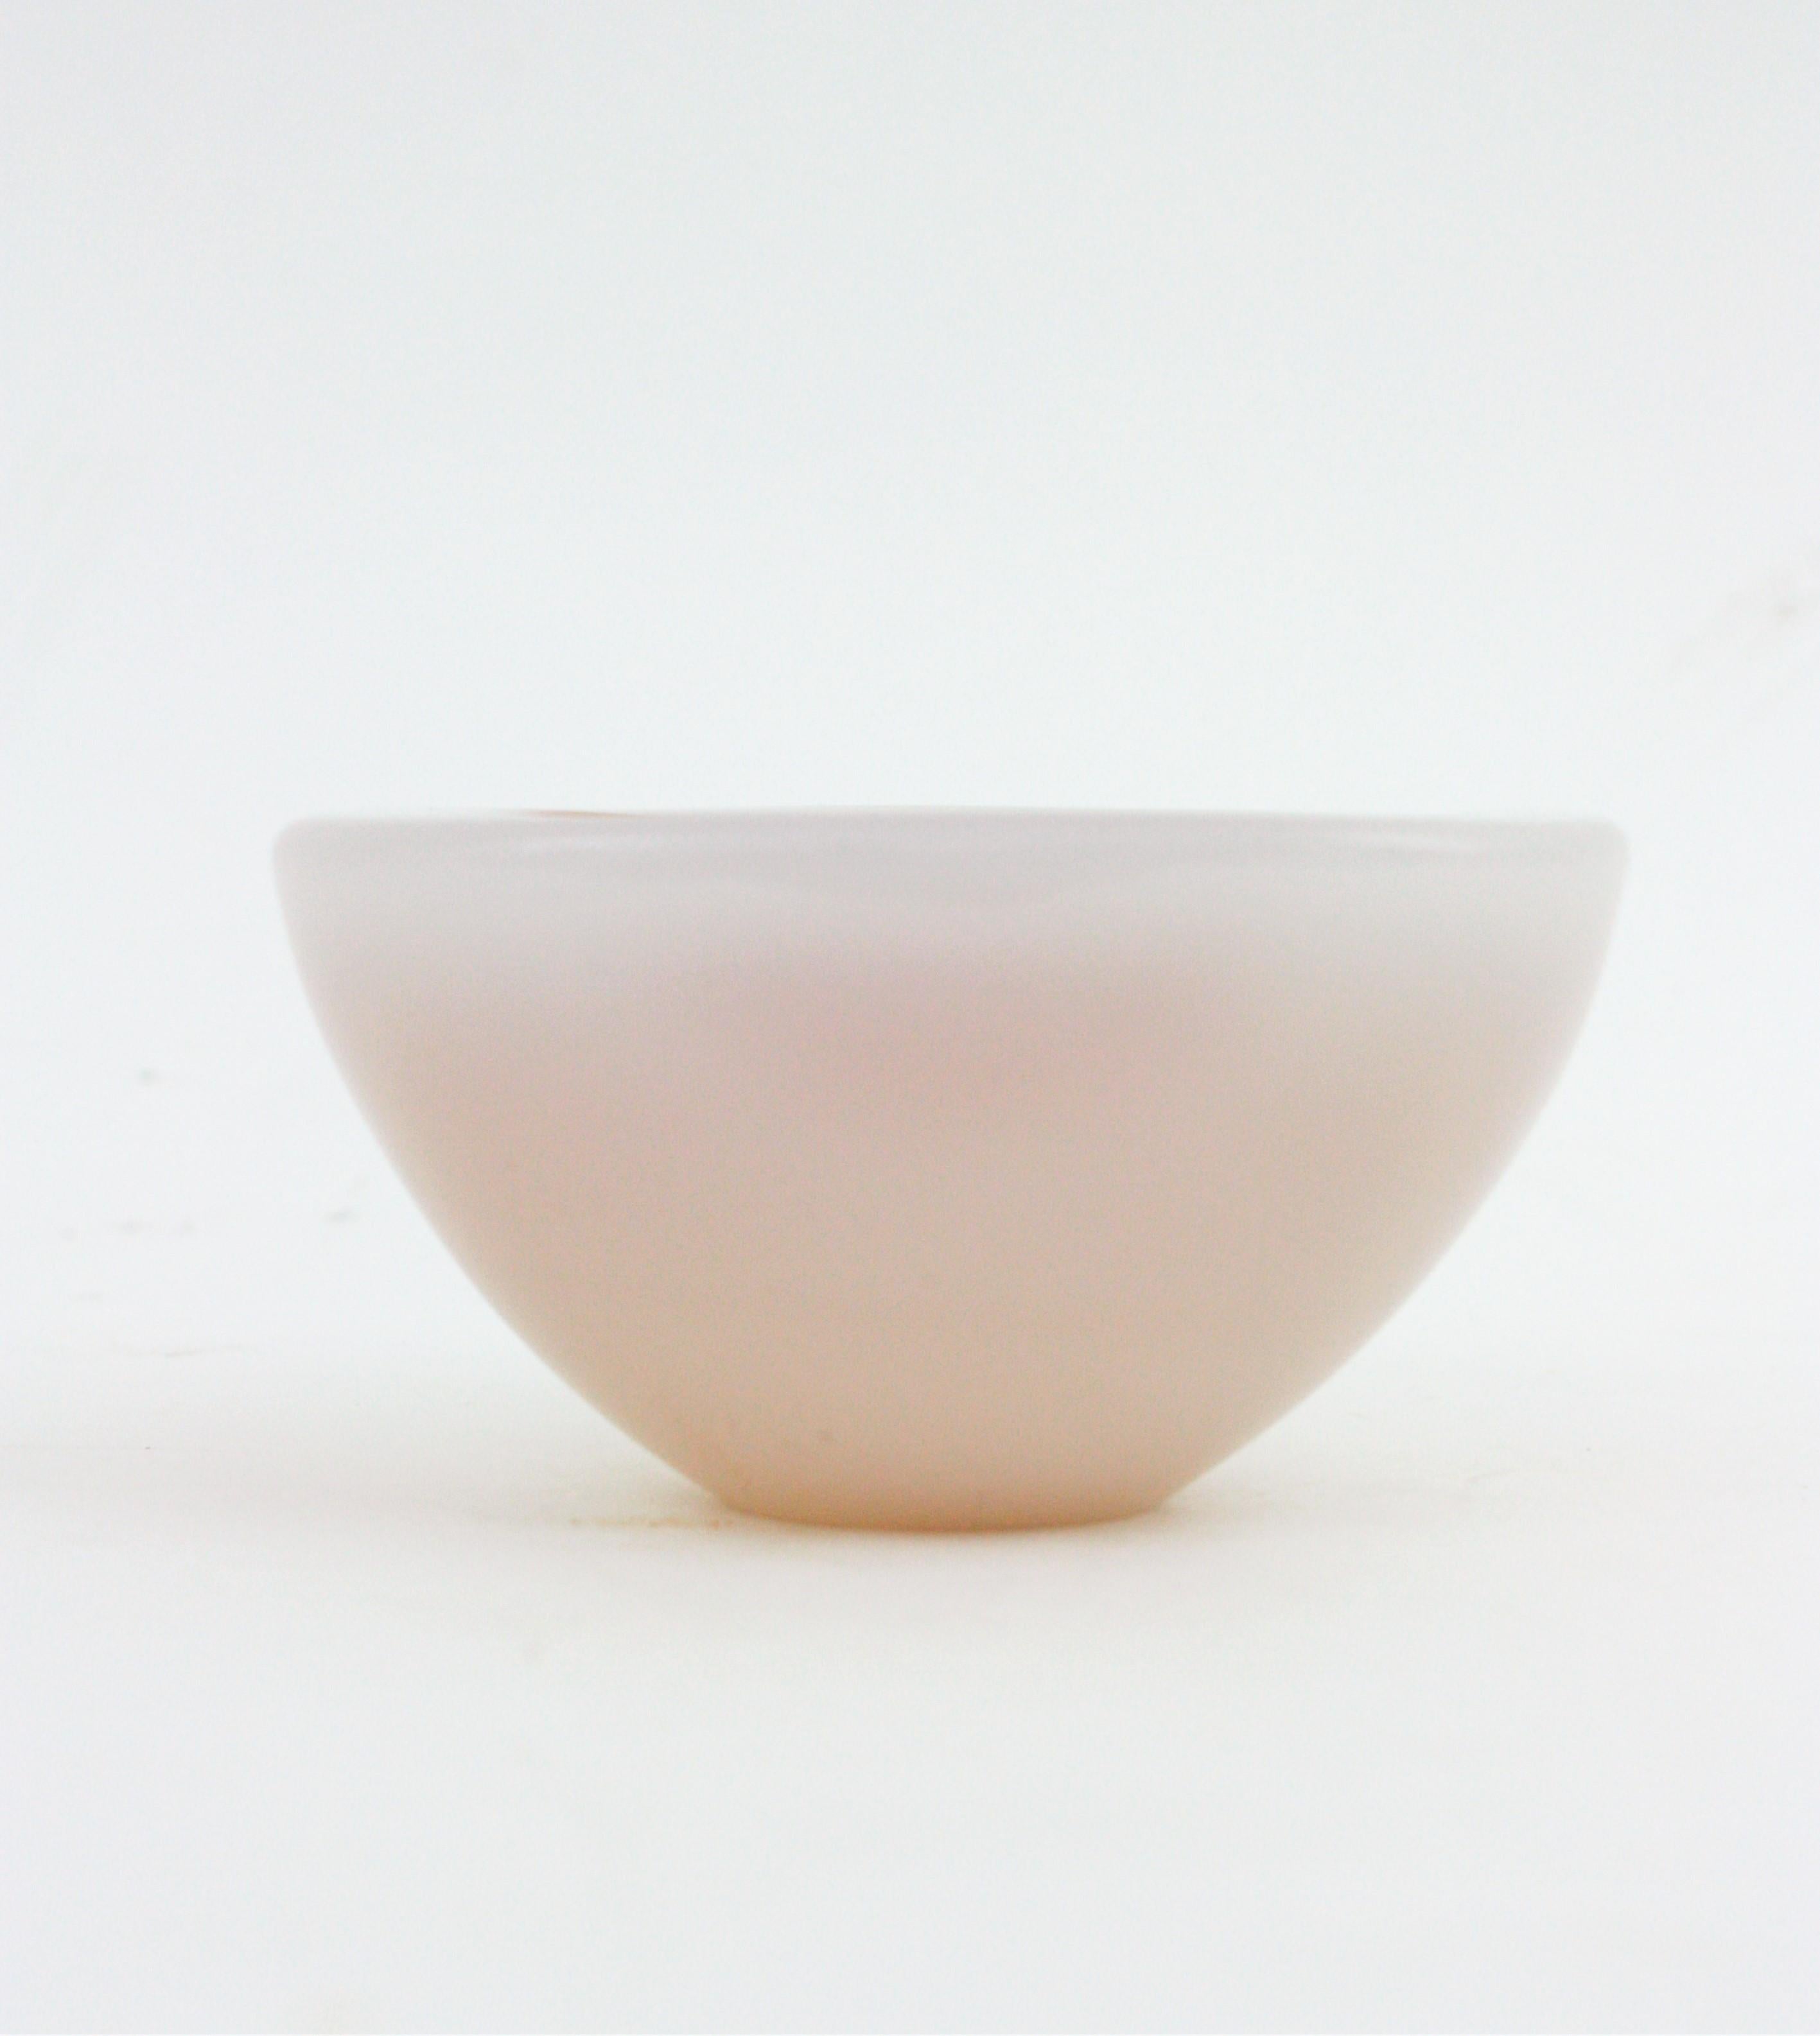 Archimede Seguso Alabastro Murano White Amber Geode Glass Bowl, 1950s For Sale 5